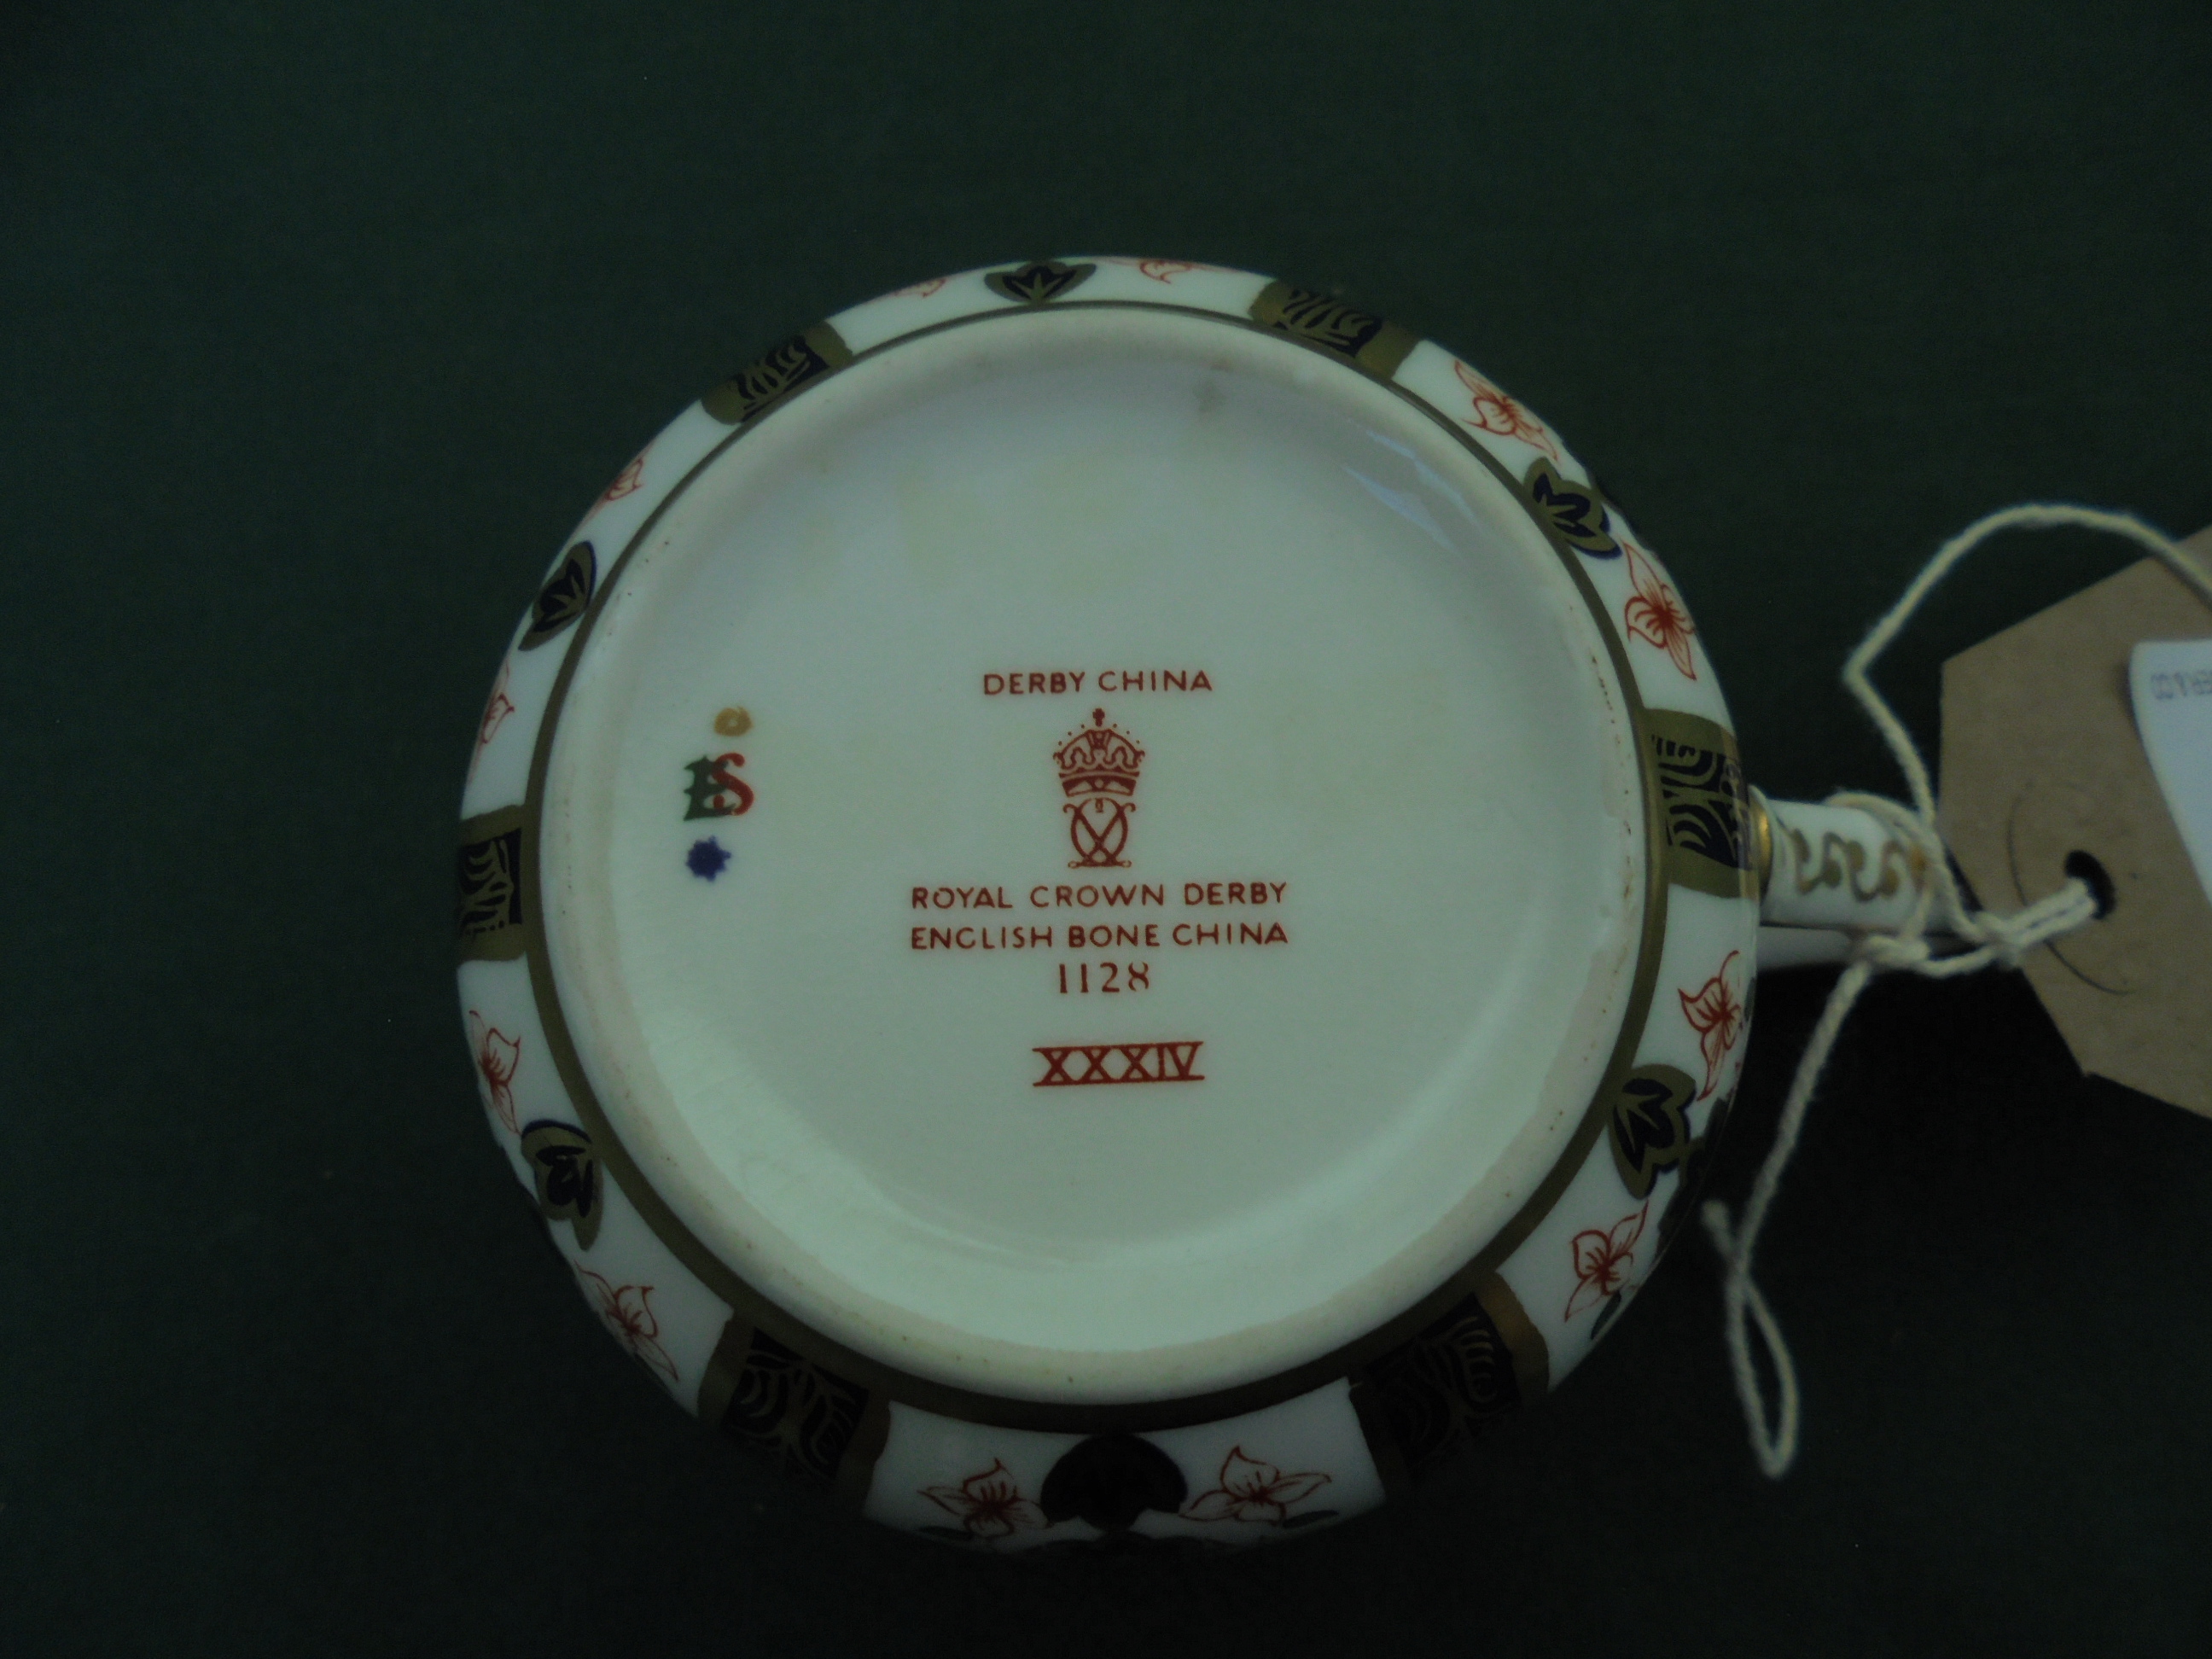 4 unused Royal Crown Derby teacups and saucers, - Image 2 of 4